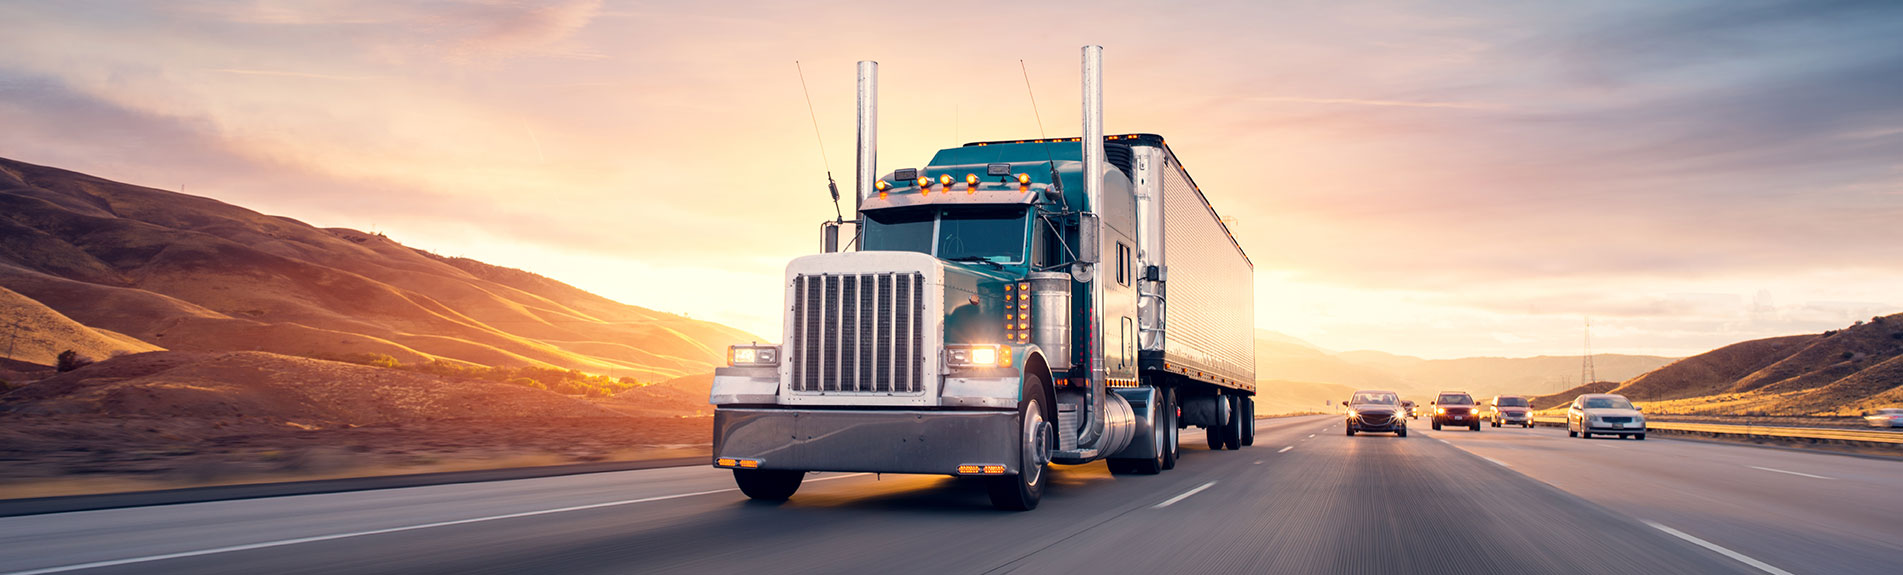 Trucking Liability Insurance in California - American Tri-Star Insurance